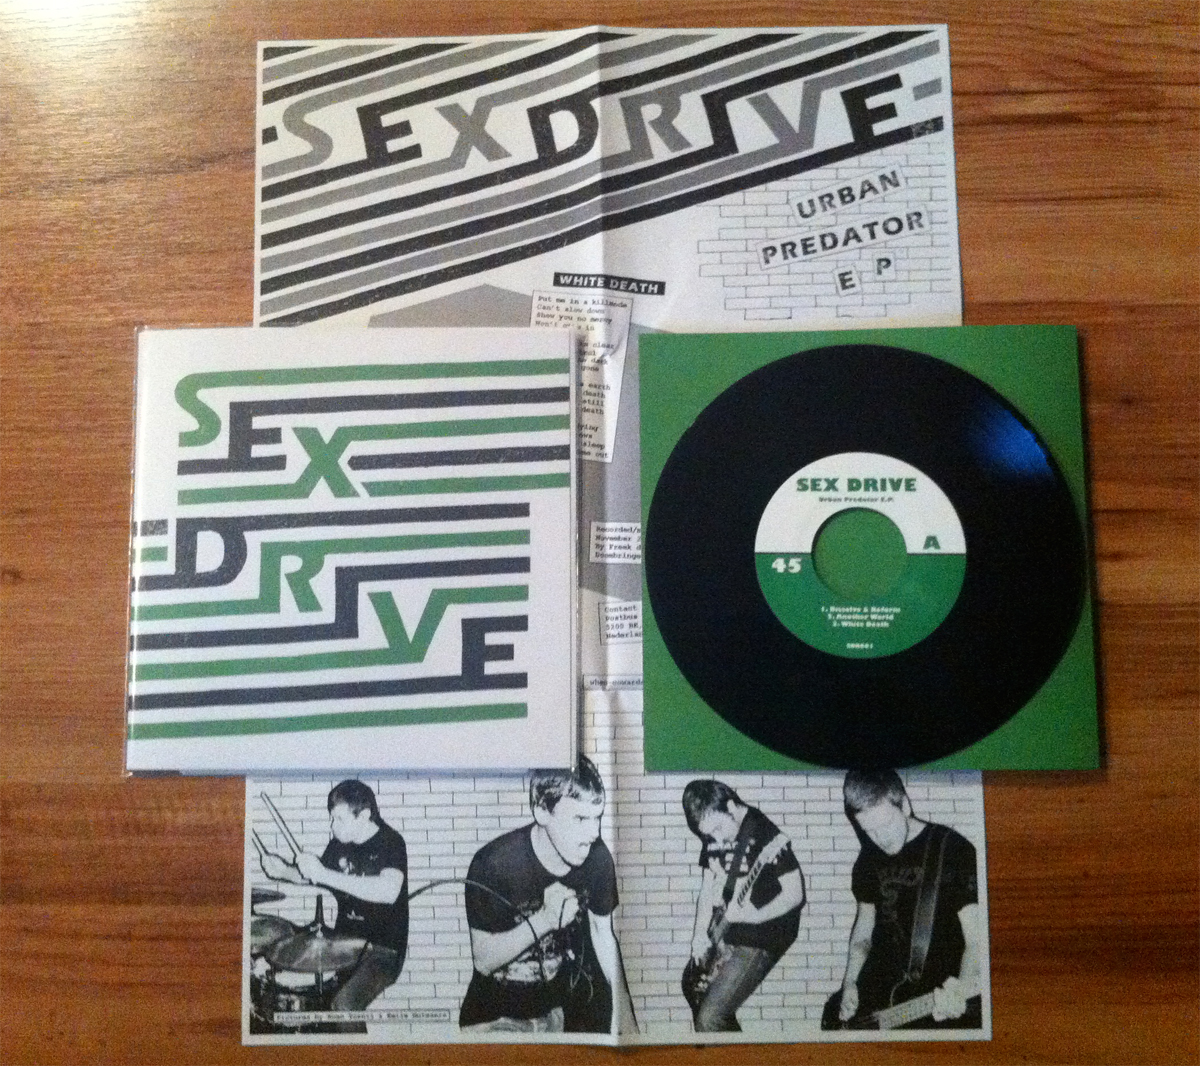 Sex Drive – Urban Predator ep out now